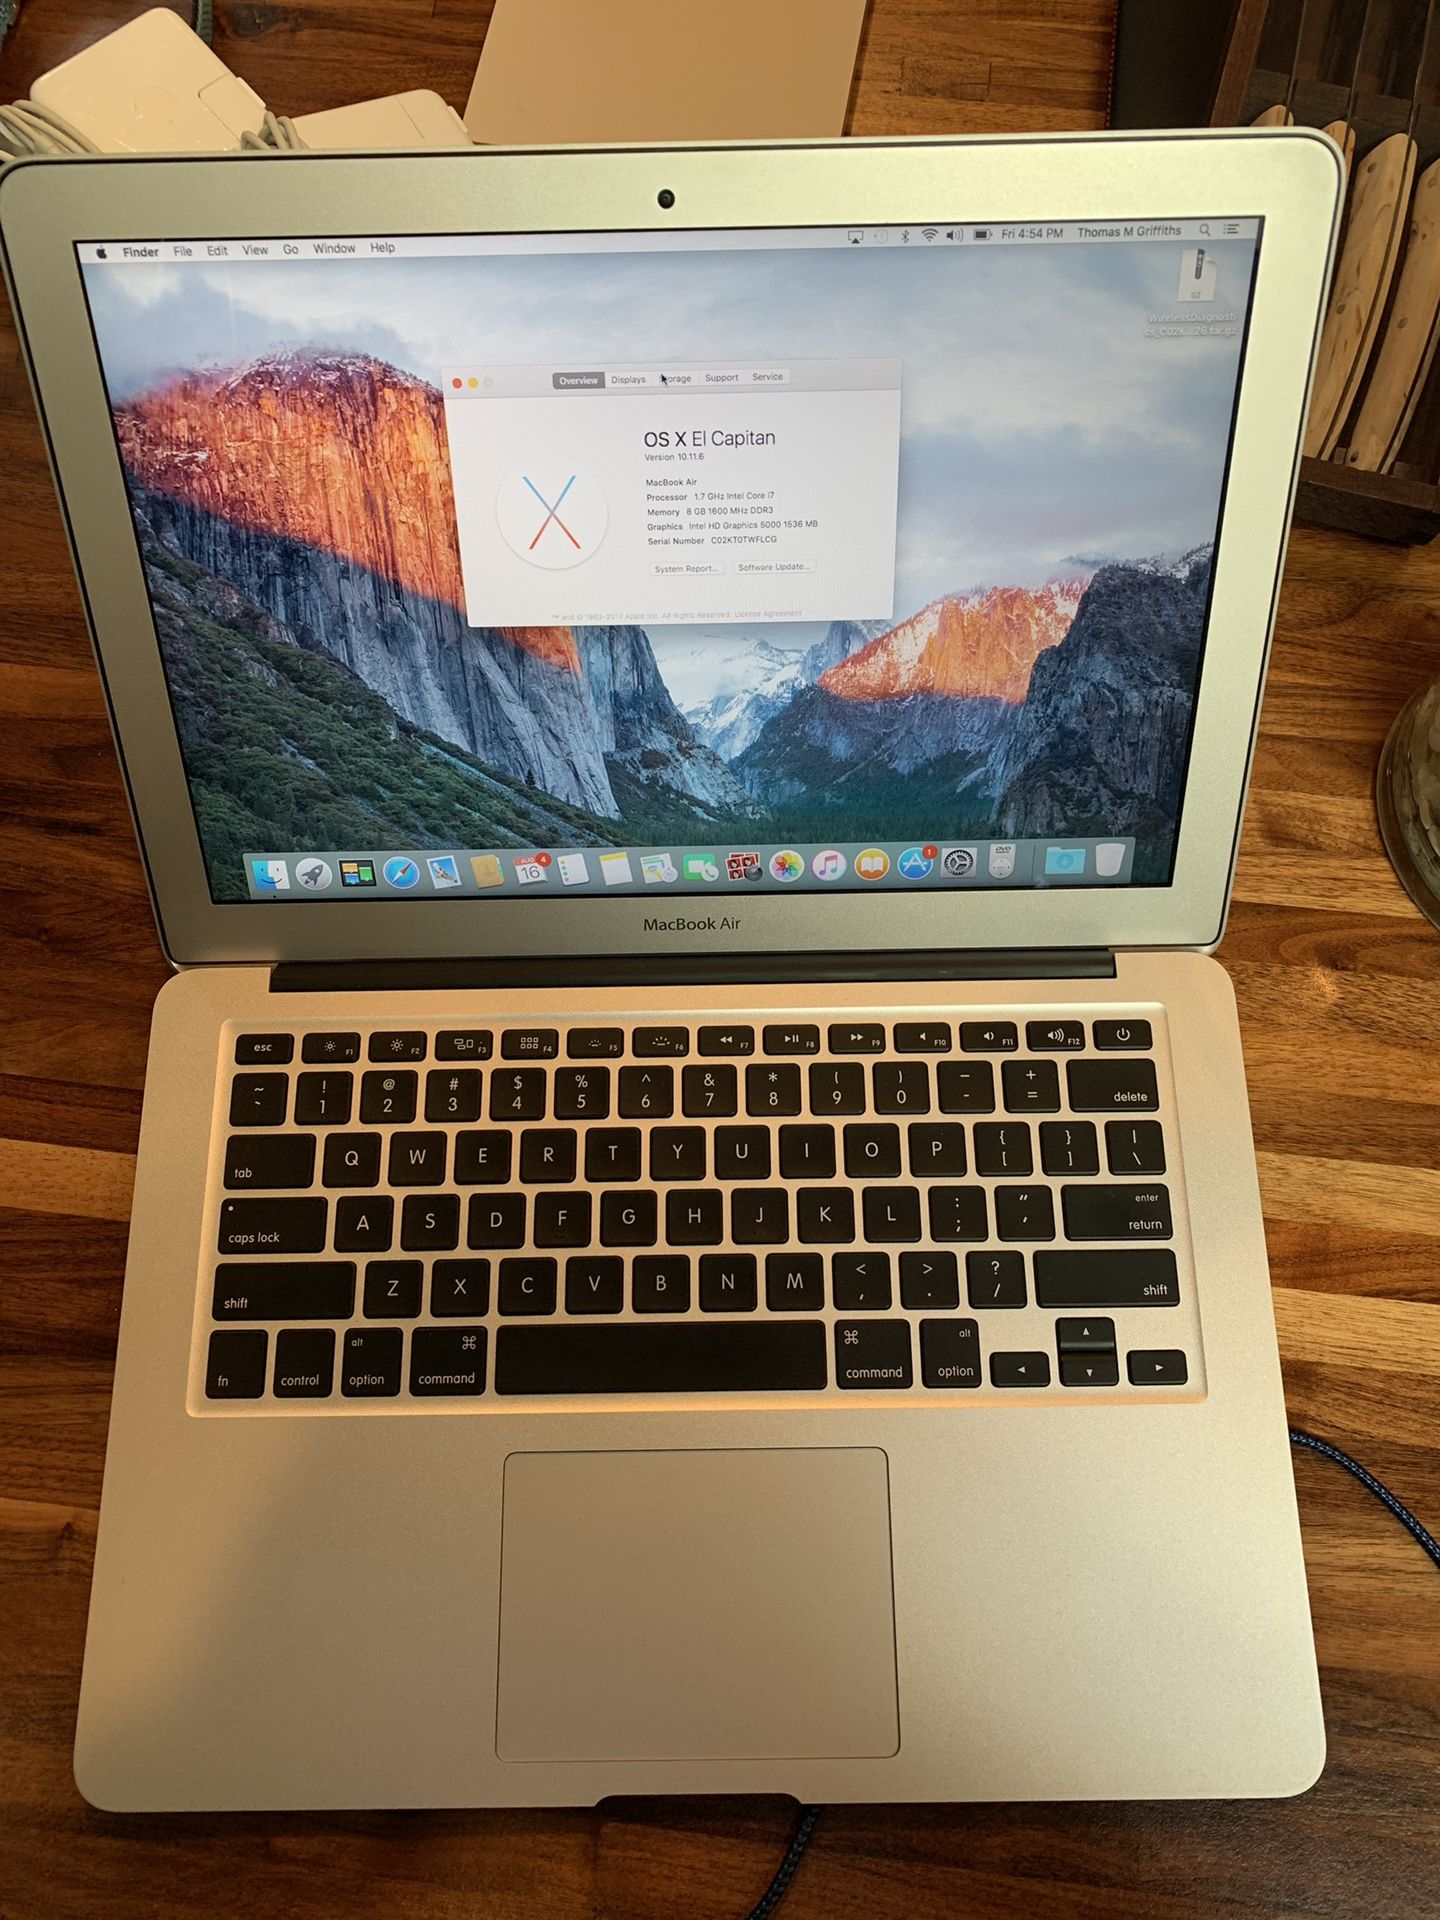 Apple MacBook Air Laptop 13" i7 1.7 GHz - 3.3GHz 8GB RAM 256GB SSD a1466 mid 2013